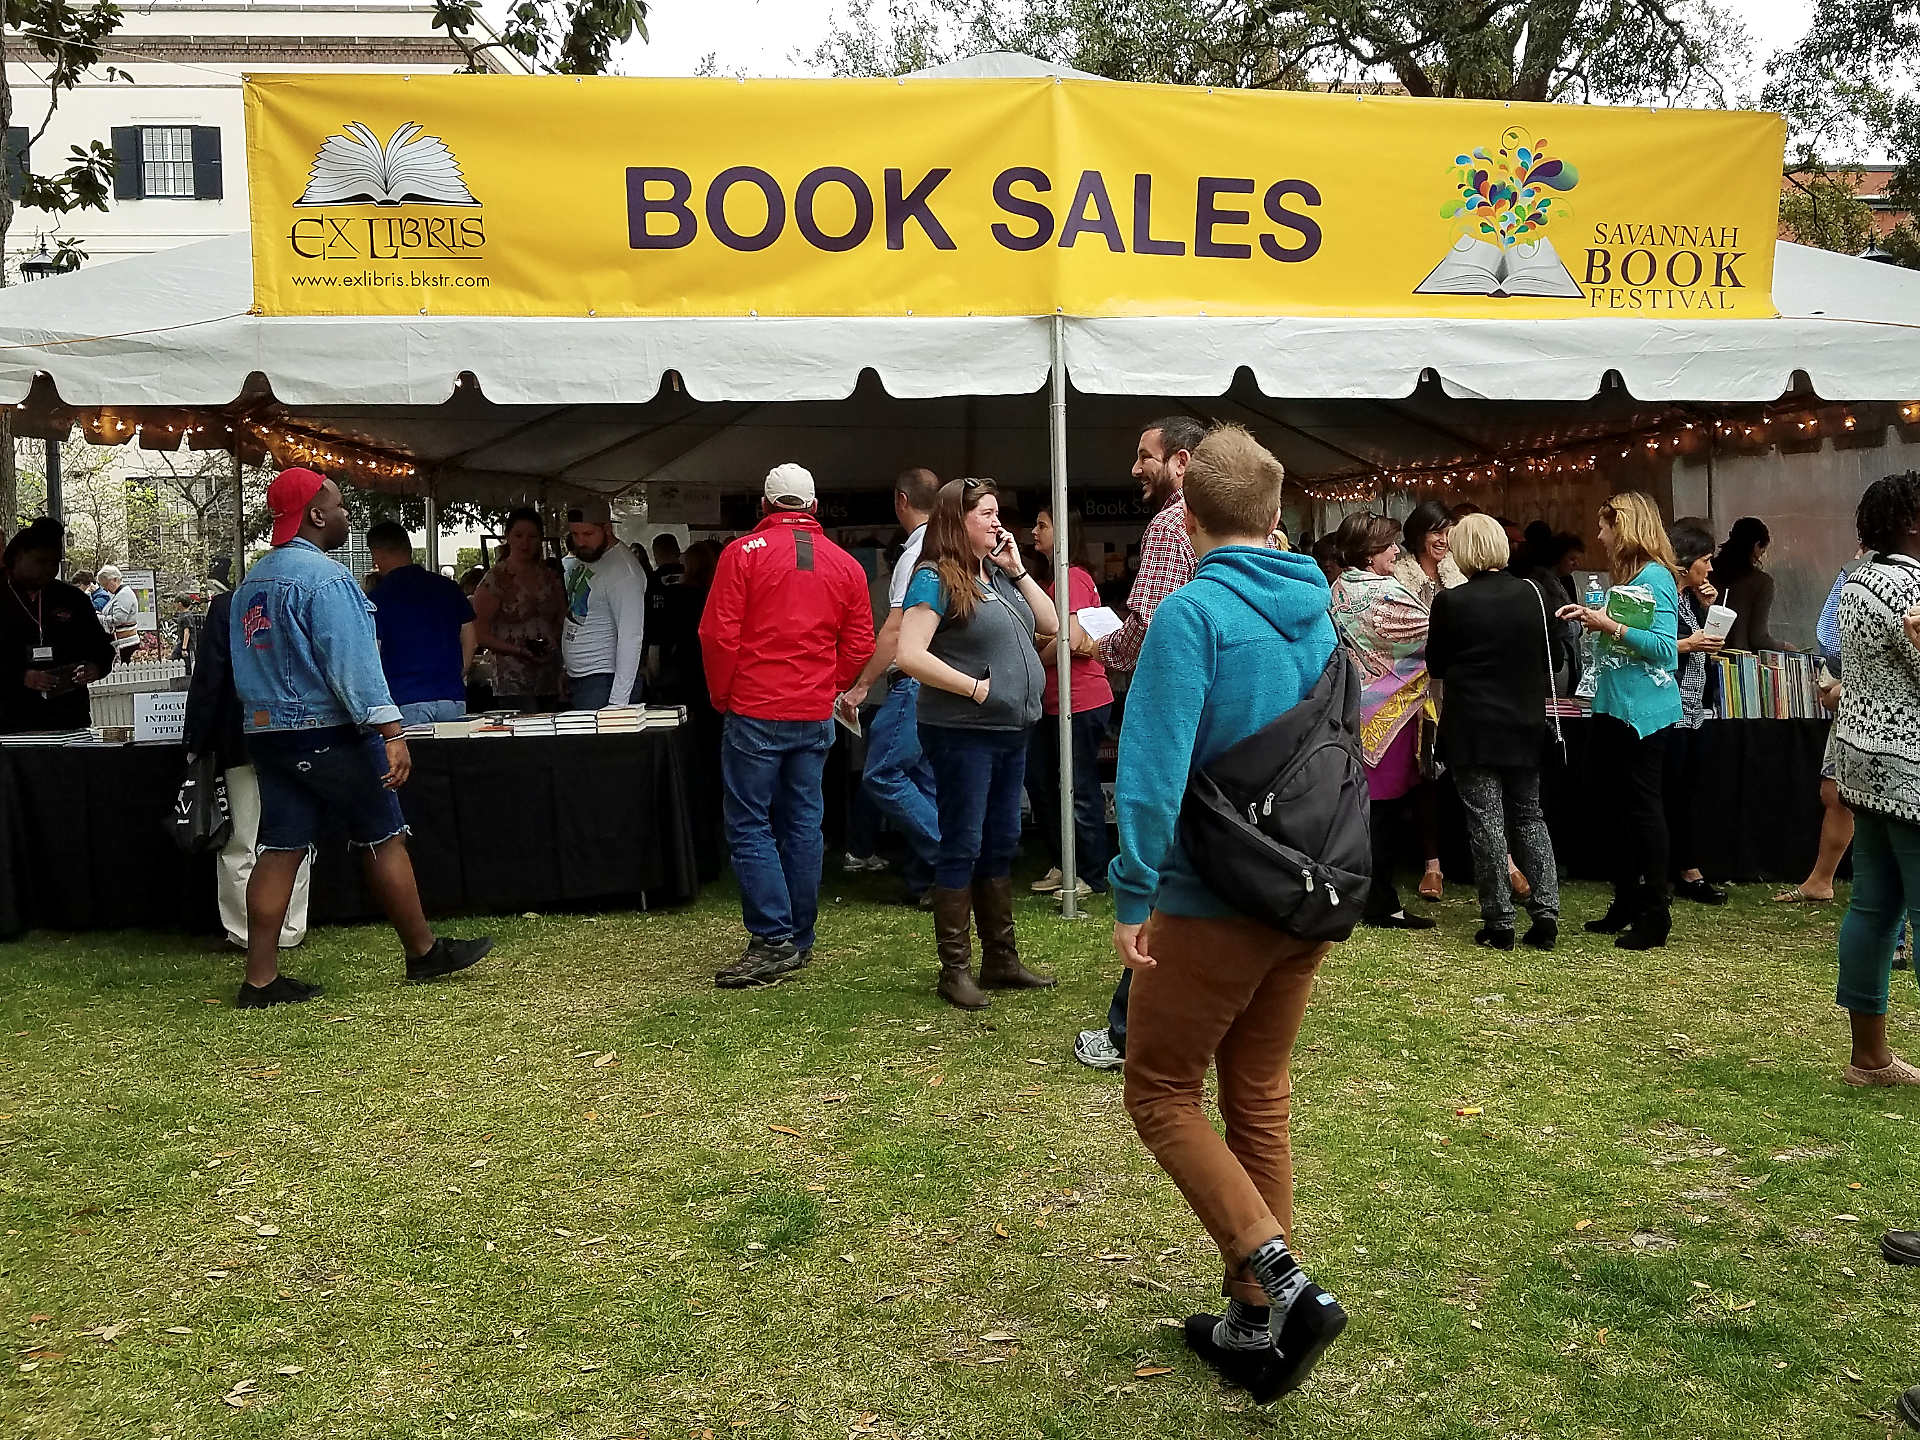 Visiting the Savannah Book Festival KentLester